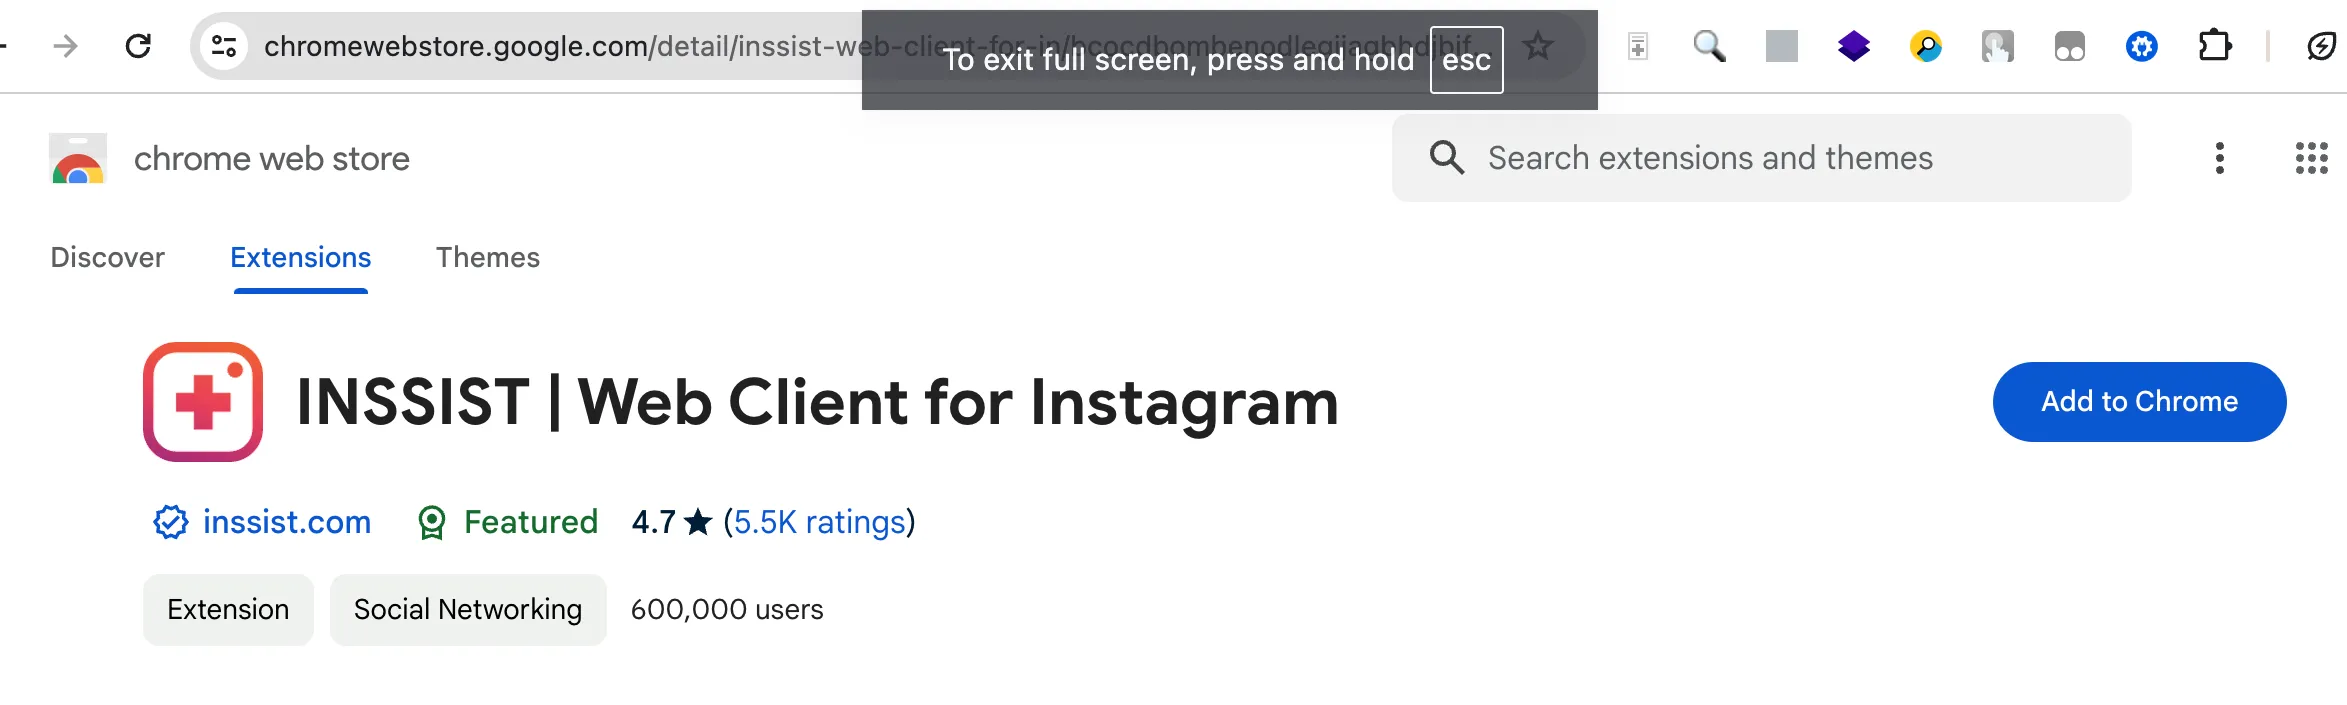 INSSIST web client for Instagram extension